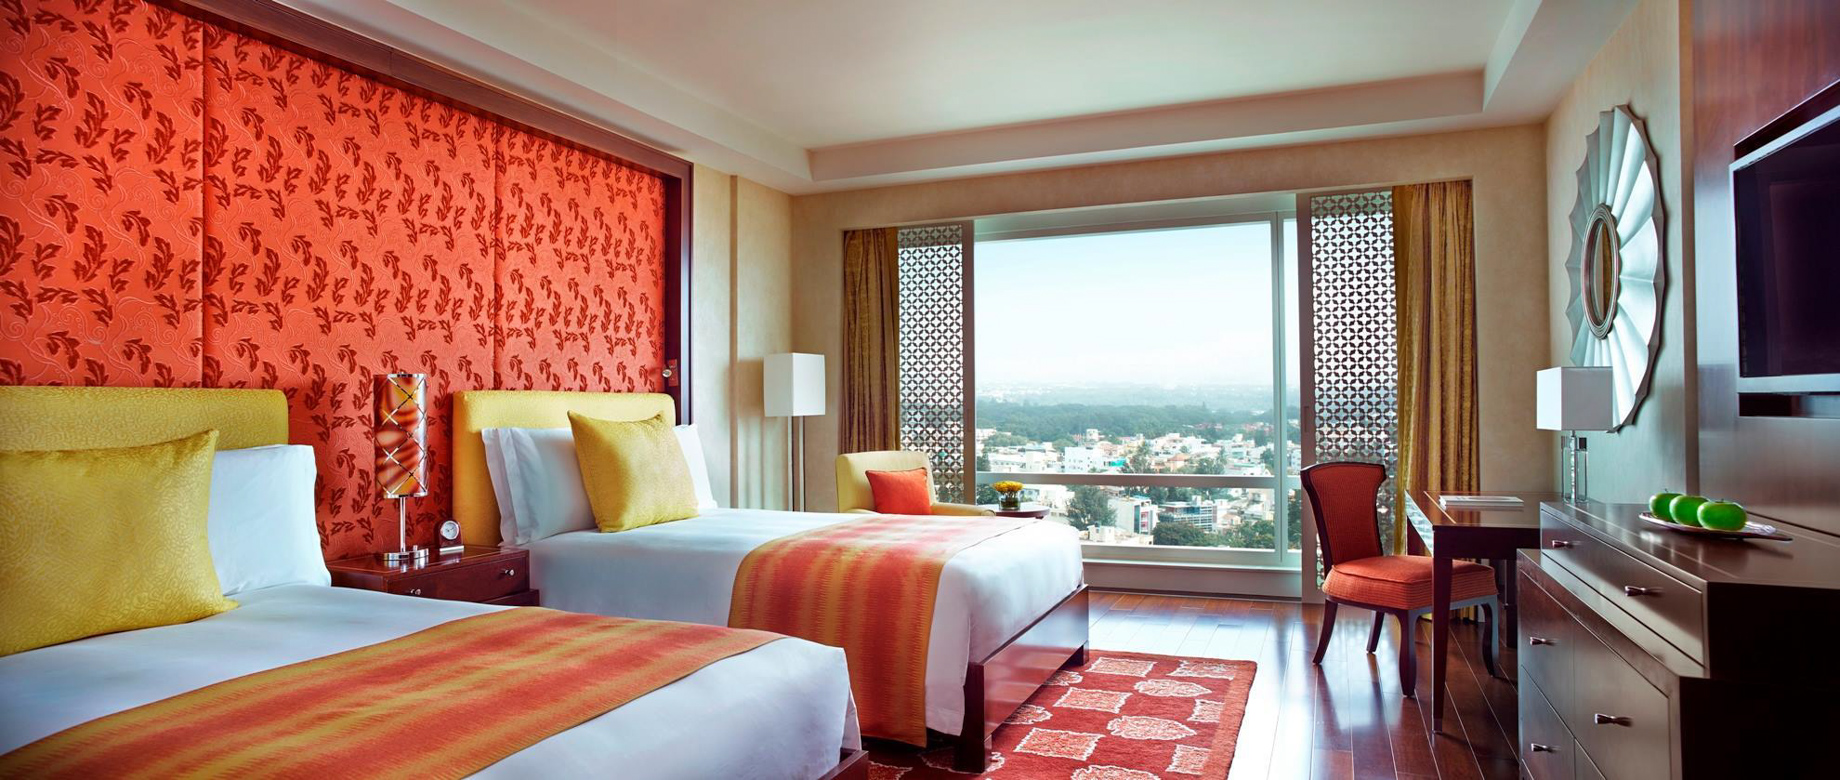 The Ritz-Carlton, Bangalore Hotel – Bangalore, Karnataka, India – Guest Room